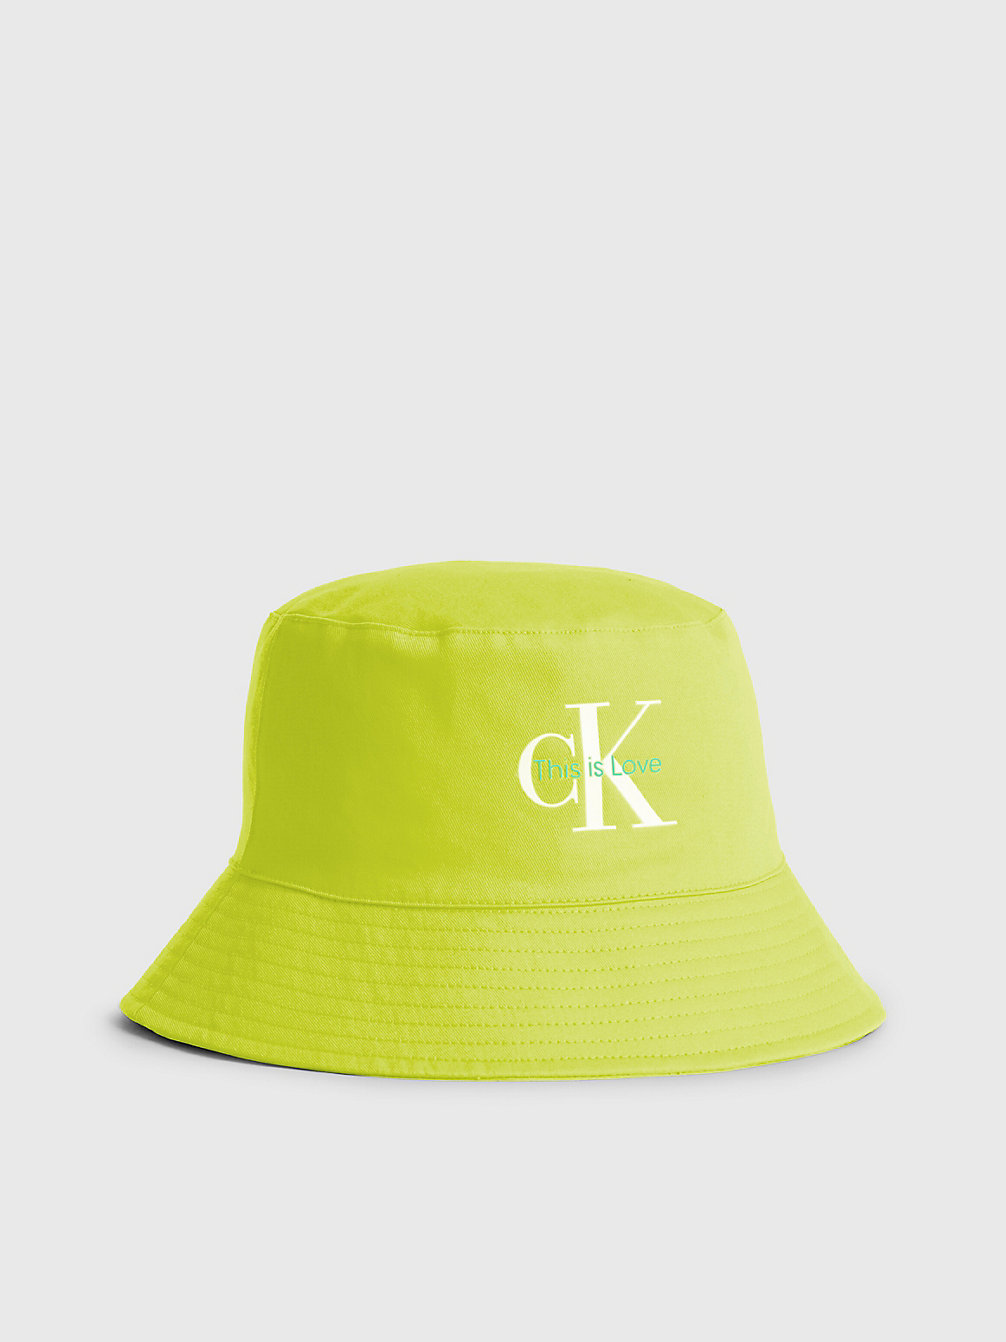 LEMON LIME/PRINT Unisex Reversible Bucket Hat - Pride undefined unisex Calvin Klein